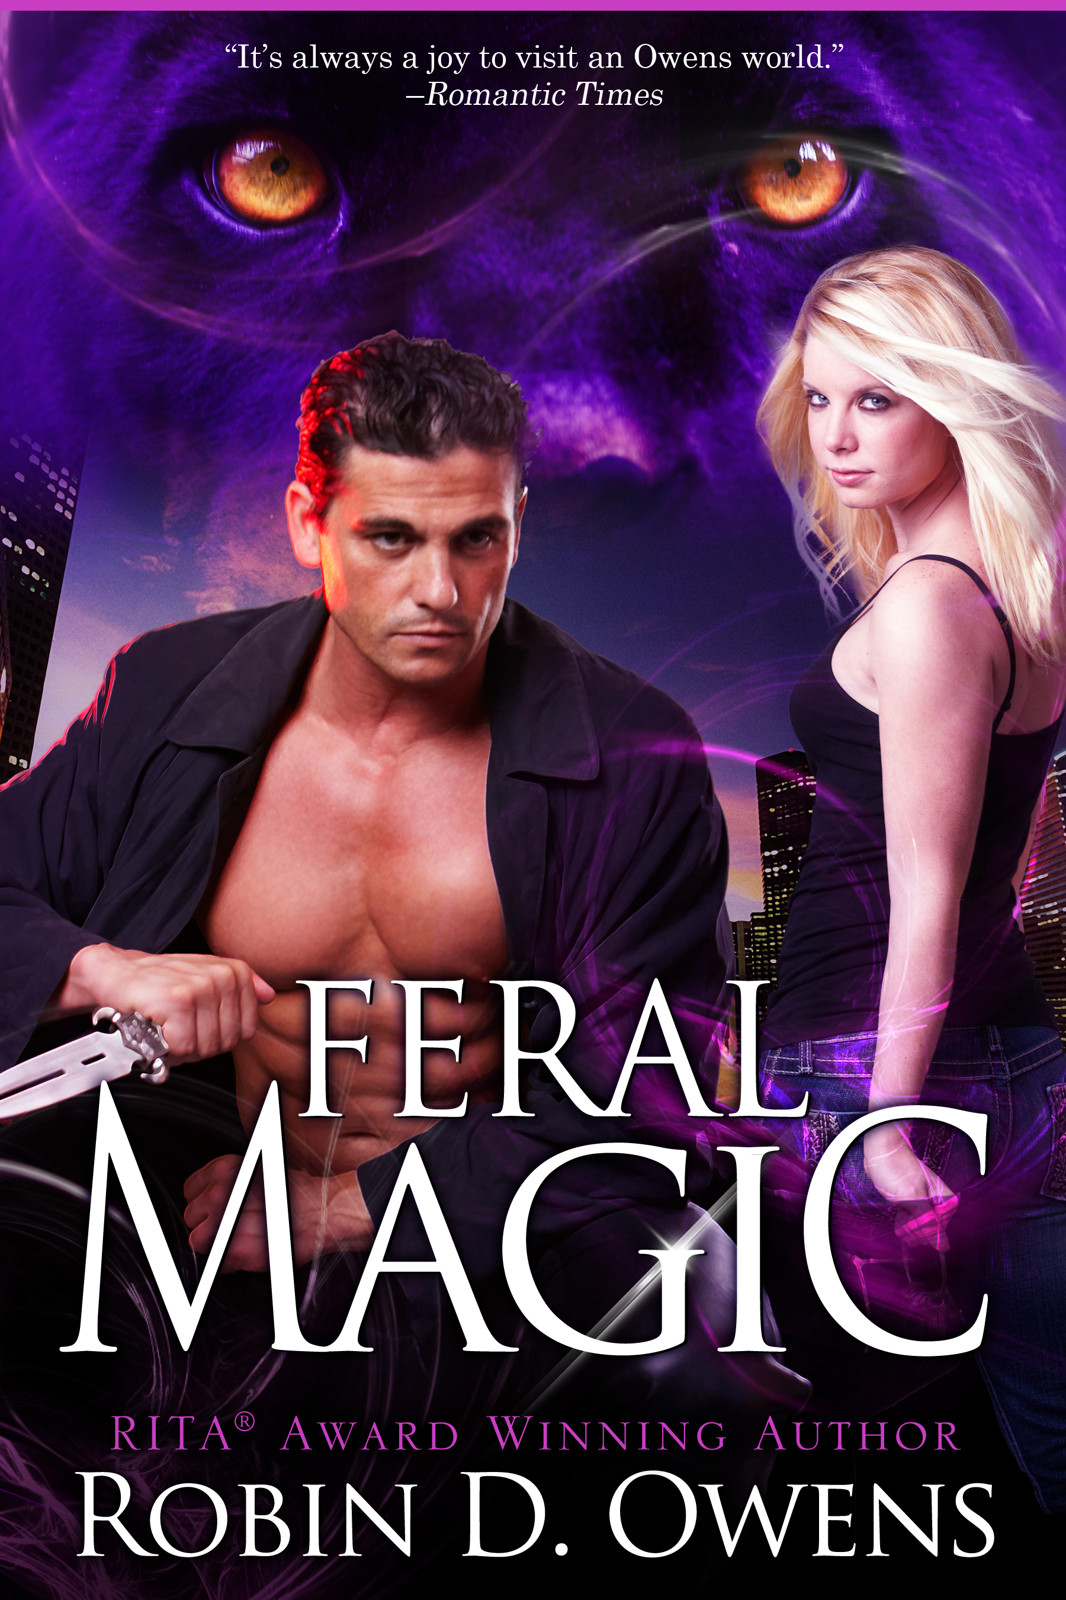 Feral Magic (2012) by Robin D. Owens